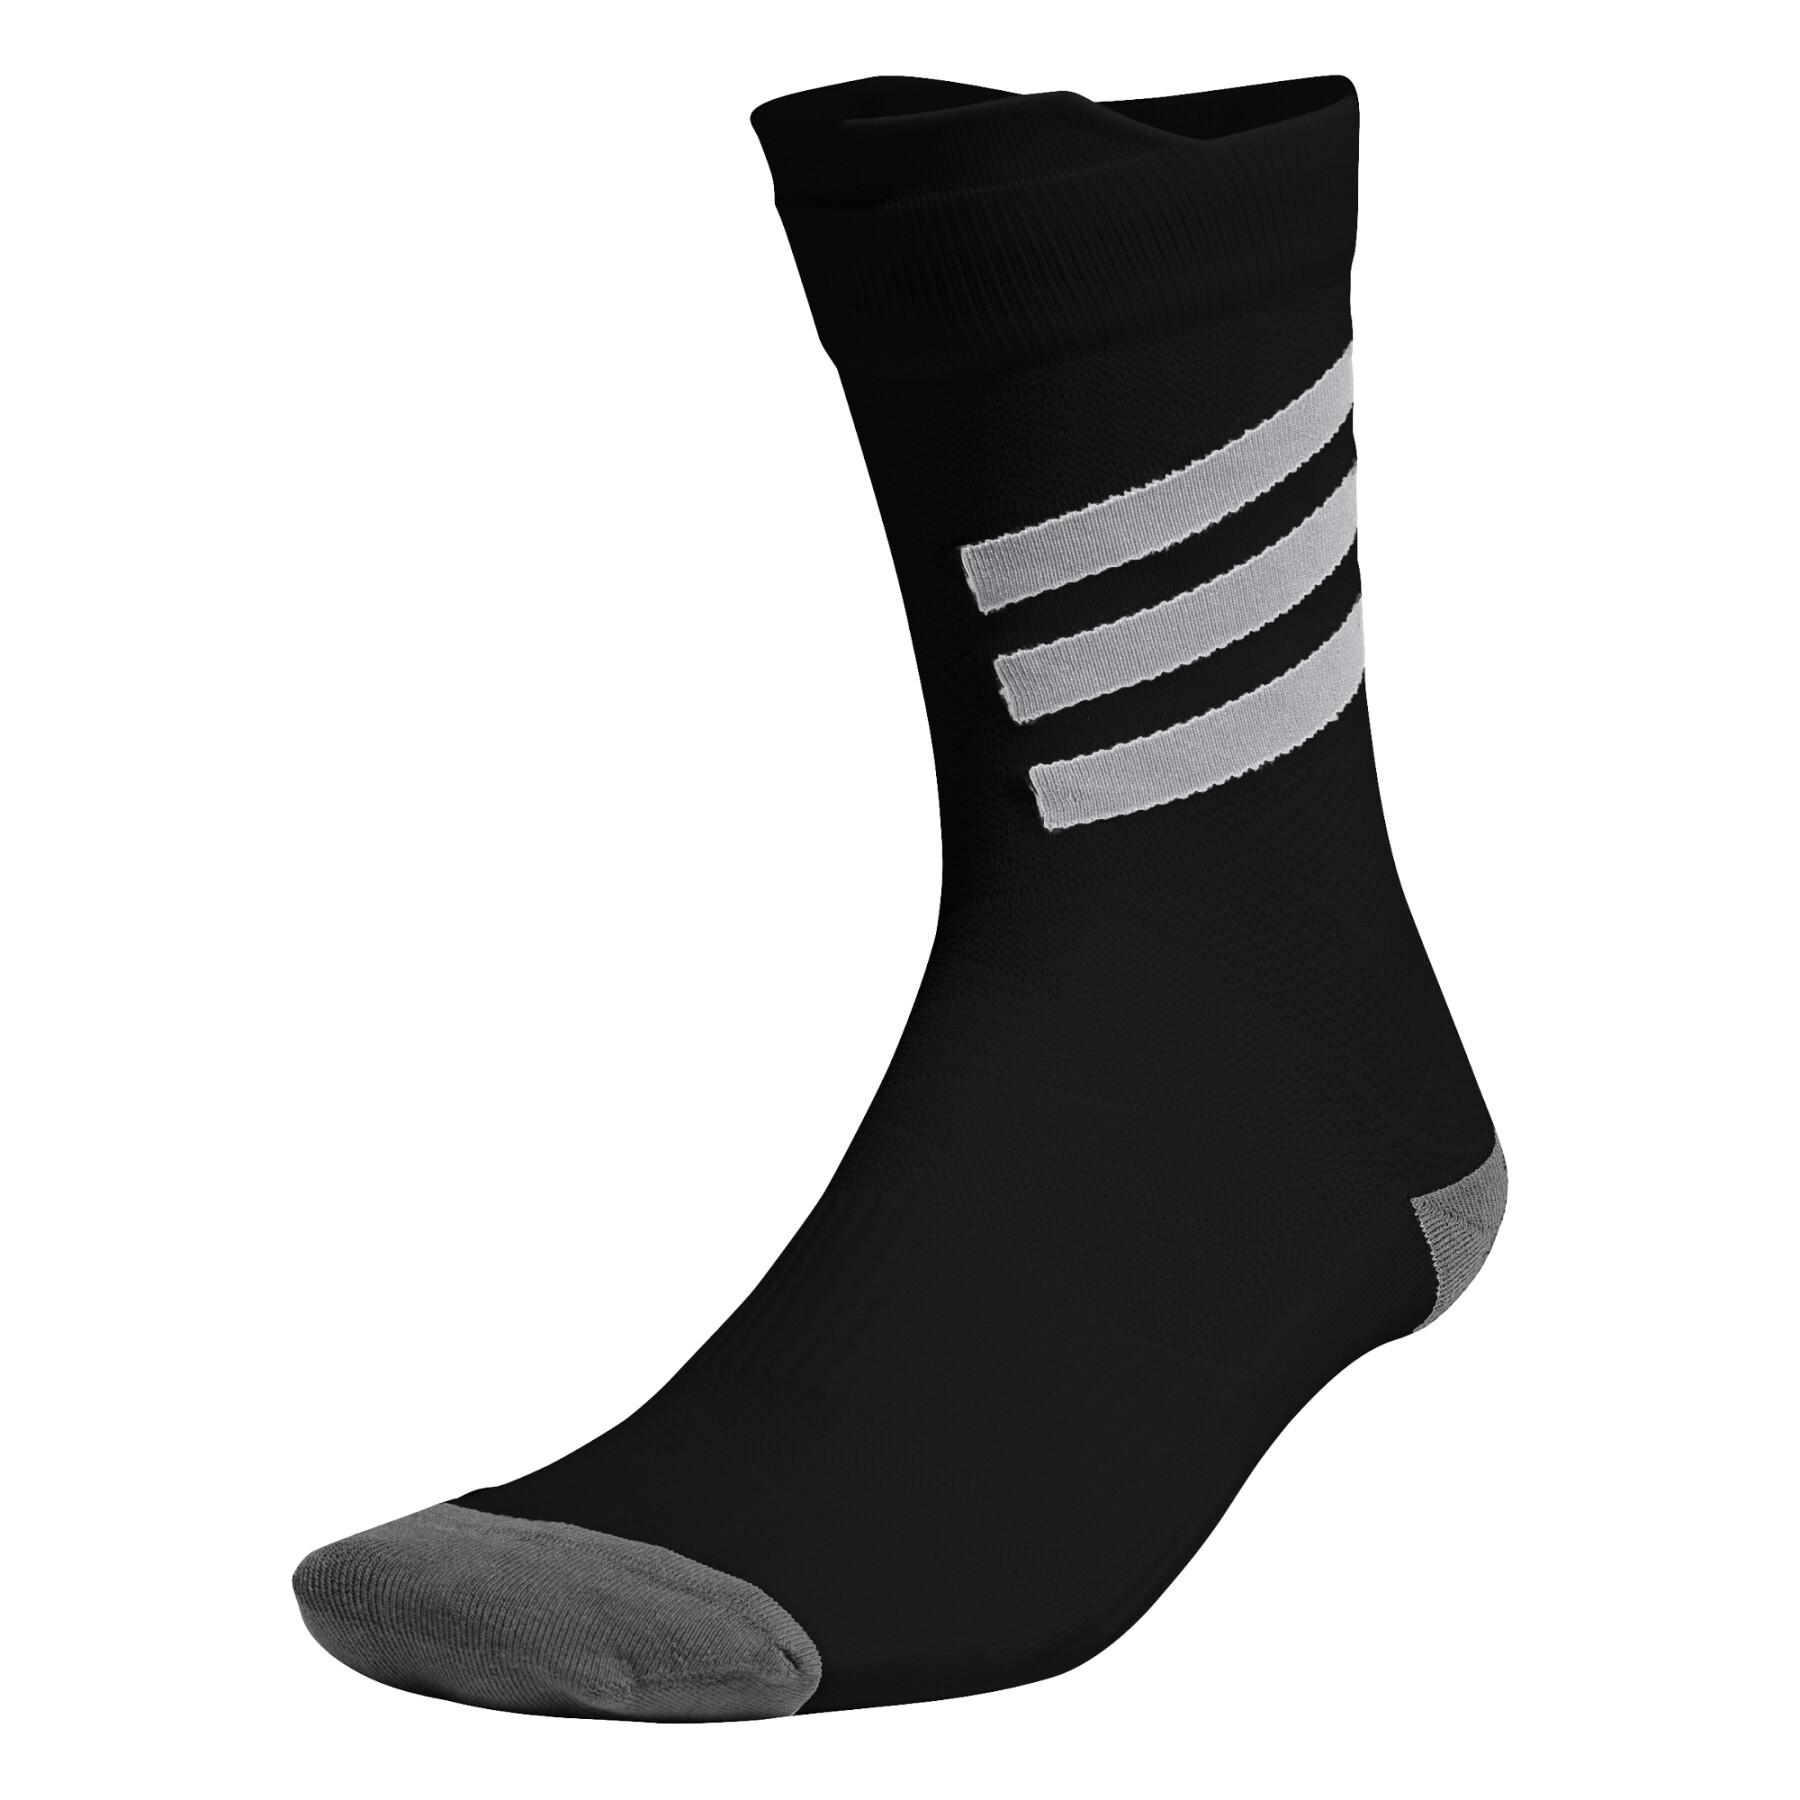 Women's socks adidas Aeroready Ultralight performance